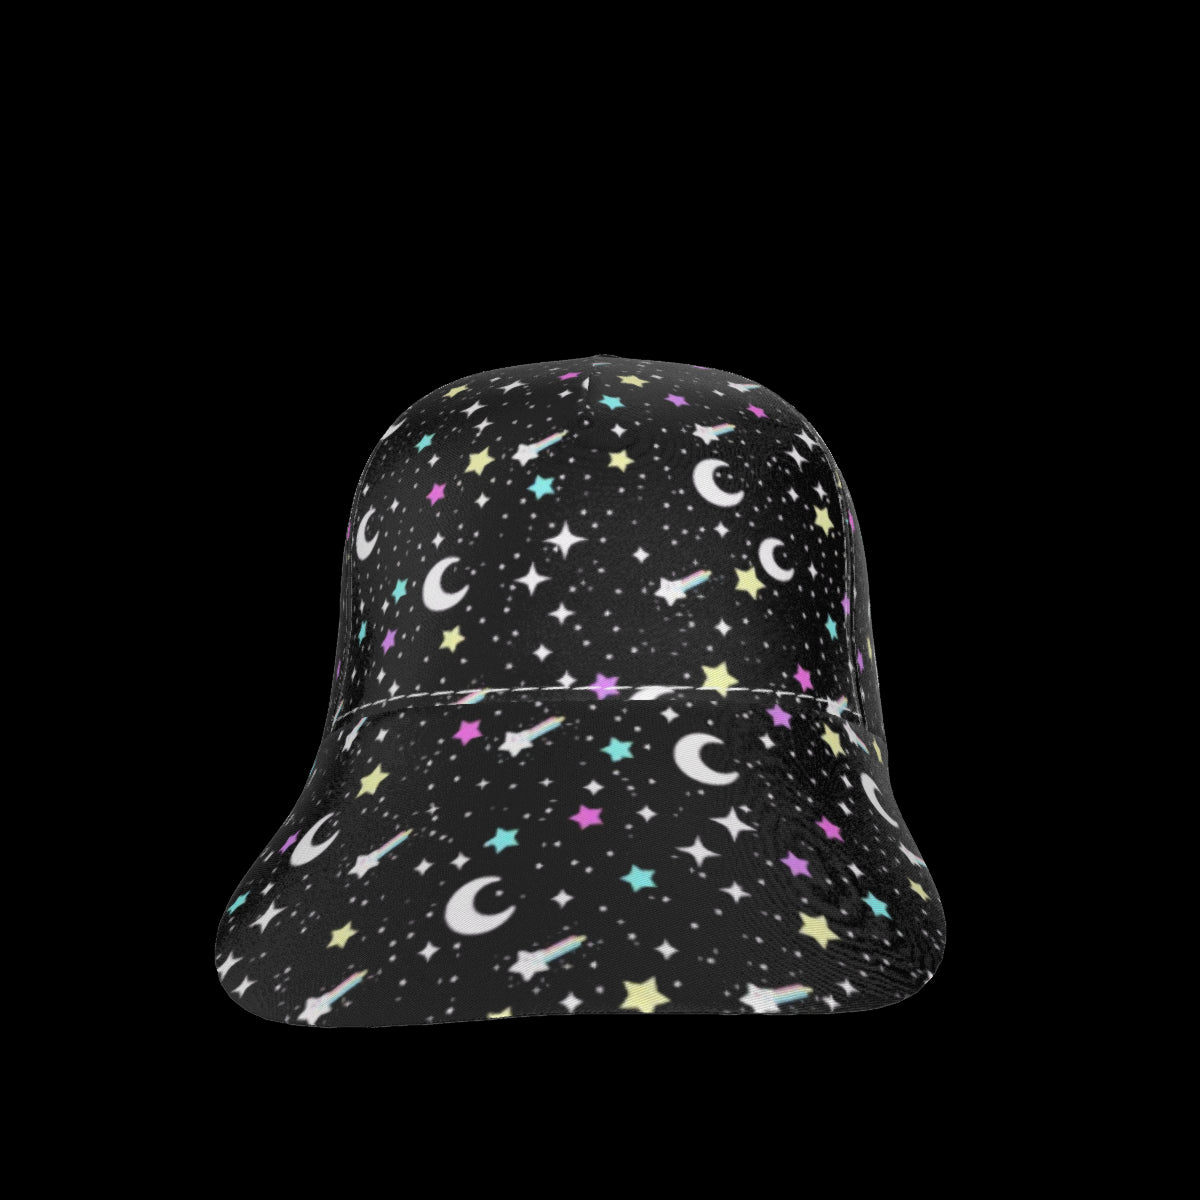 Starry Glitter Black Peaked Cap